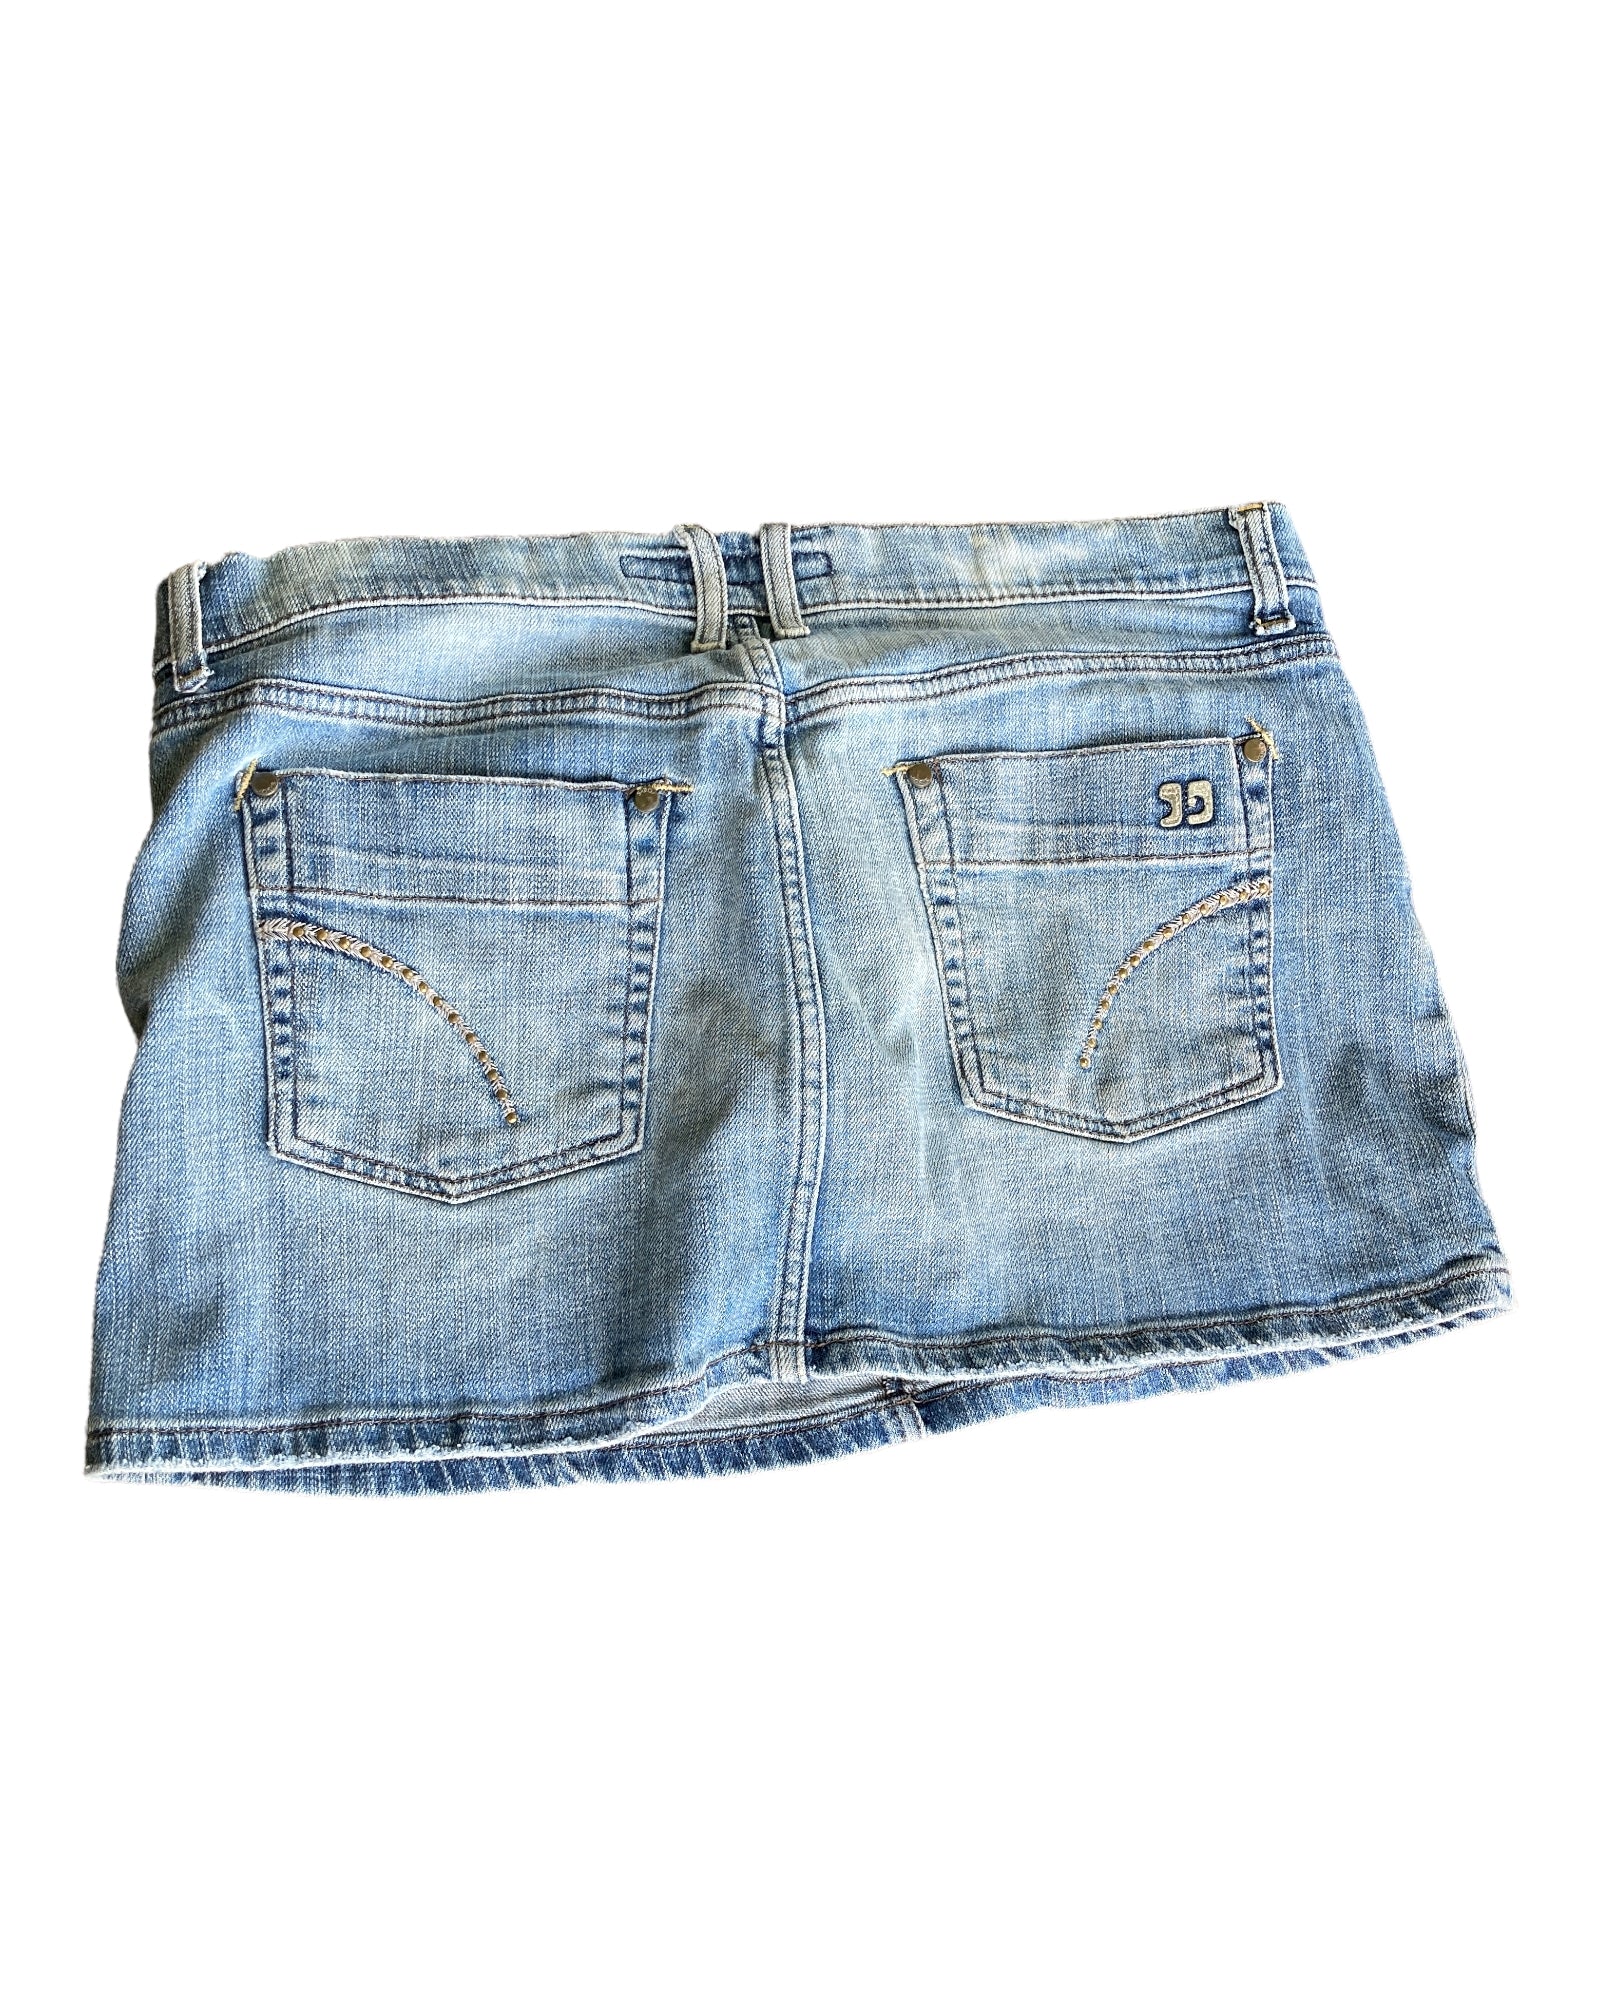 Joe's Jeans Jean Skirt, 35